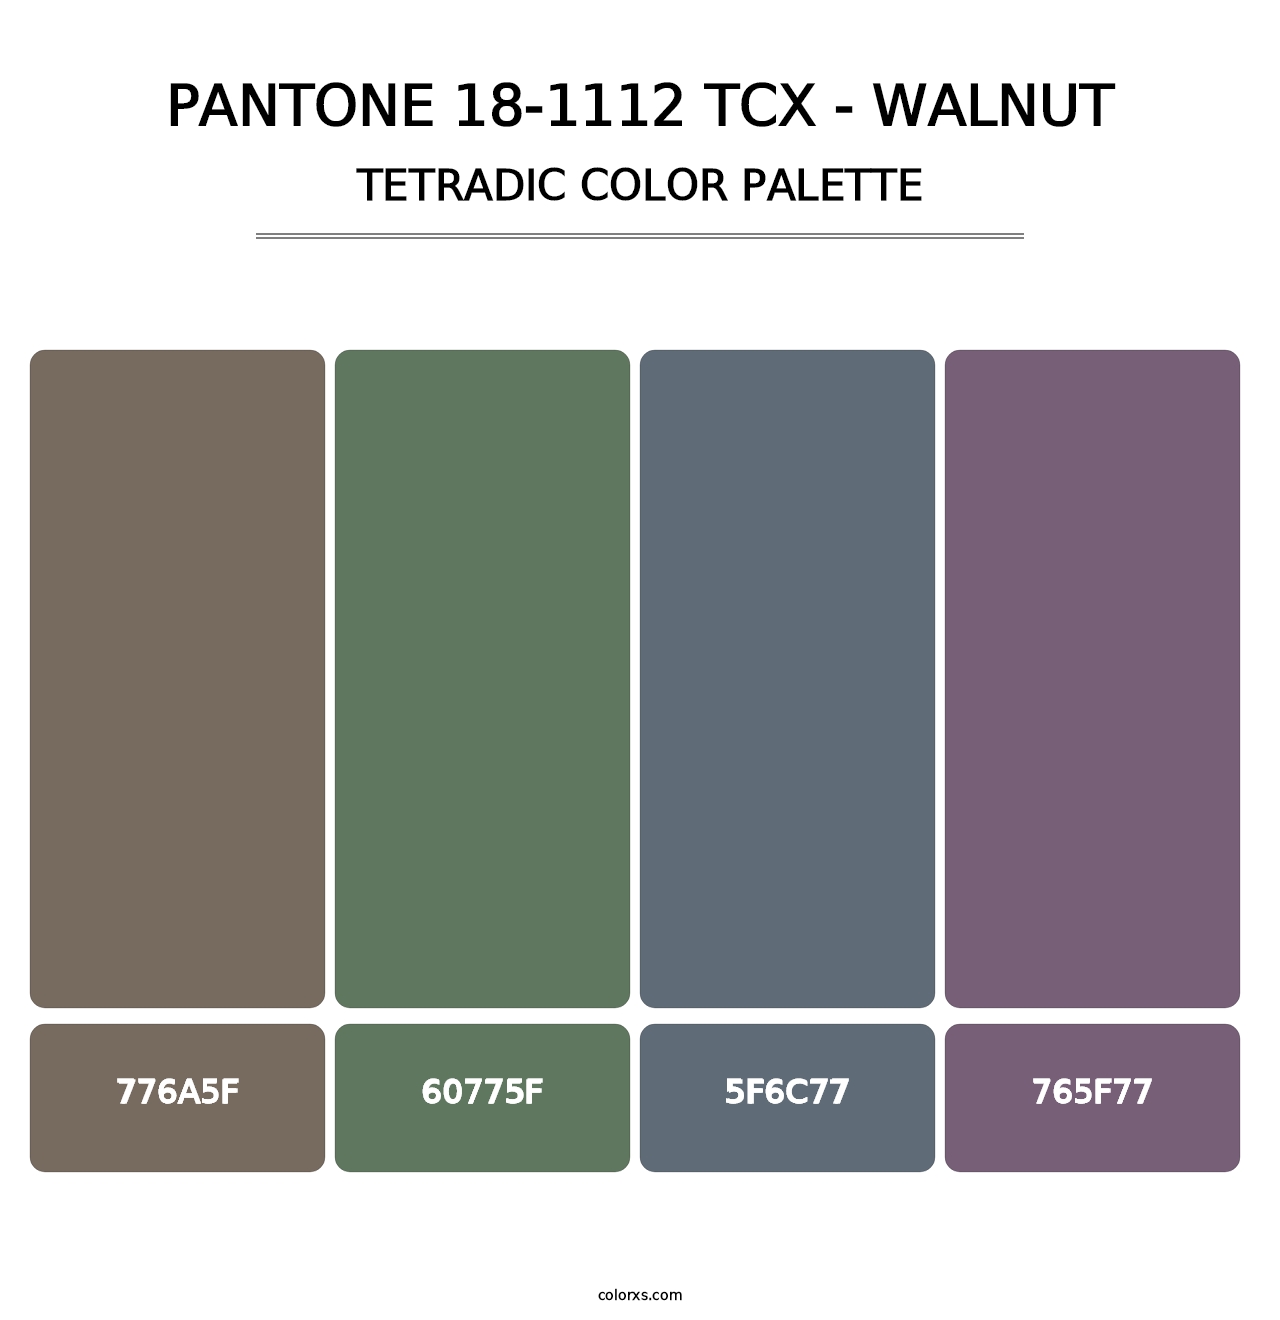 PANTONE 18-1112 TCX - Walnut - Tetradic Color Palette